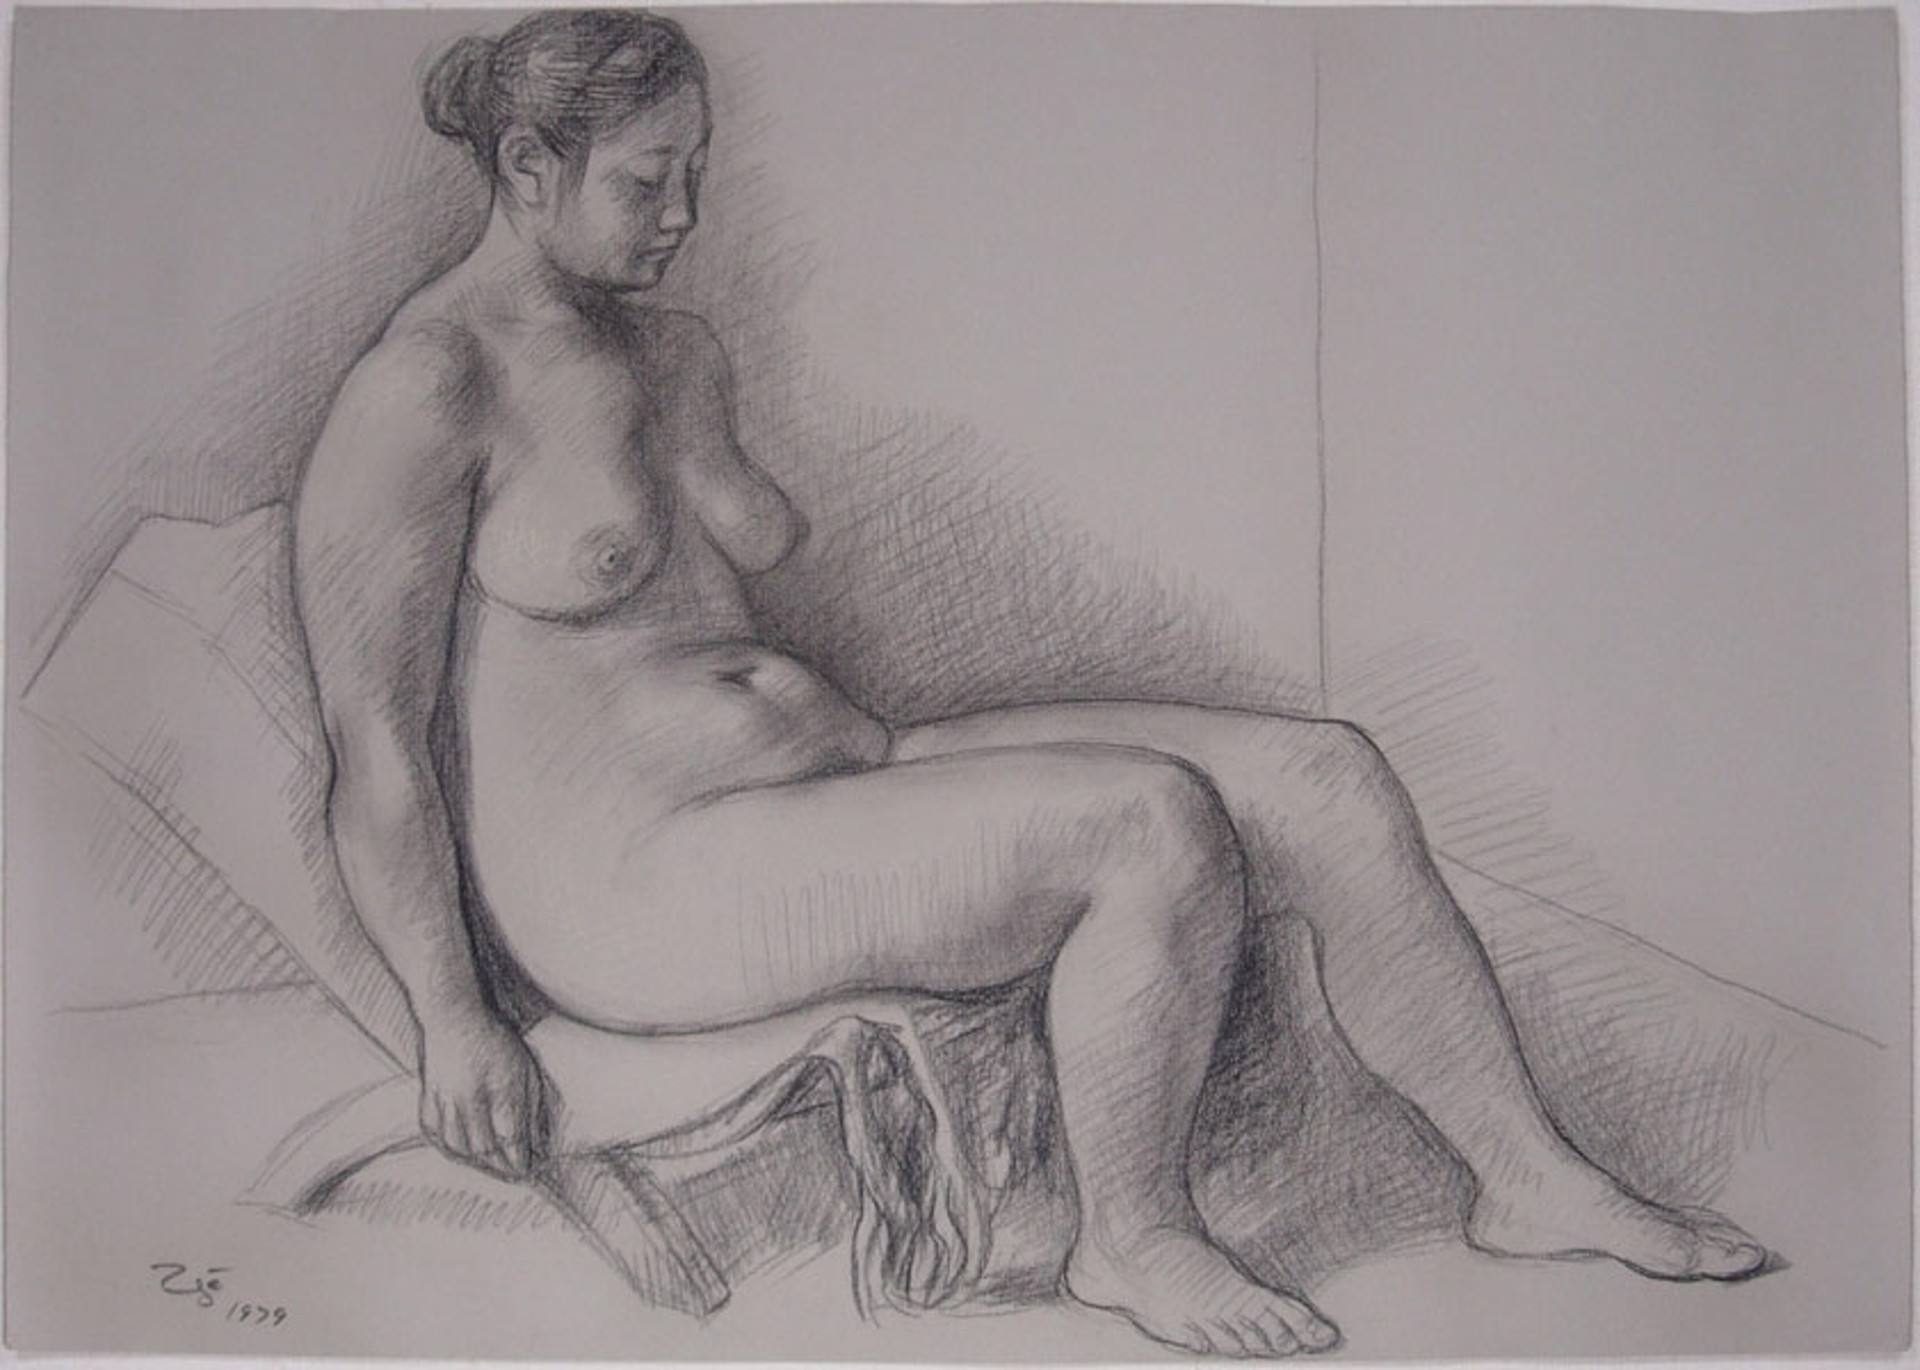 Desnudo by Francisco Zuniga